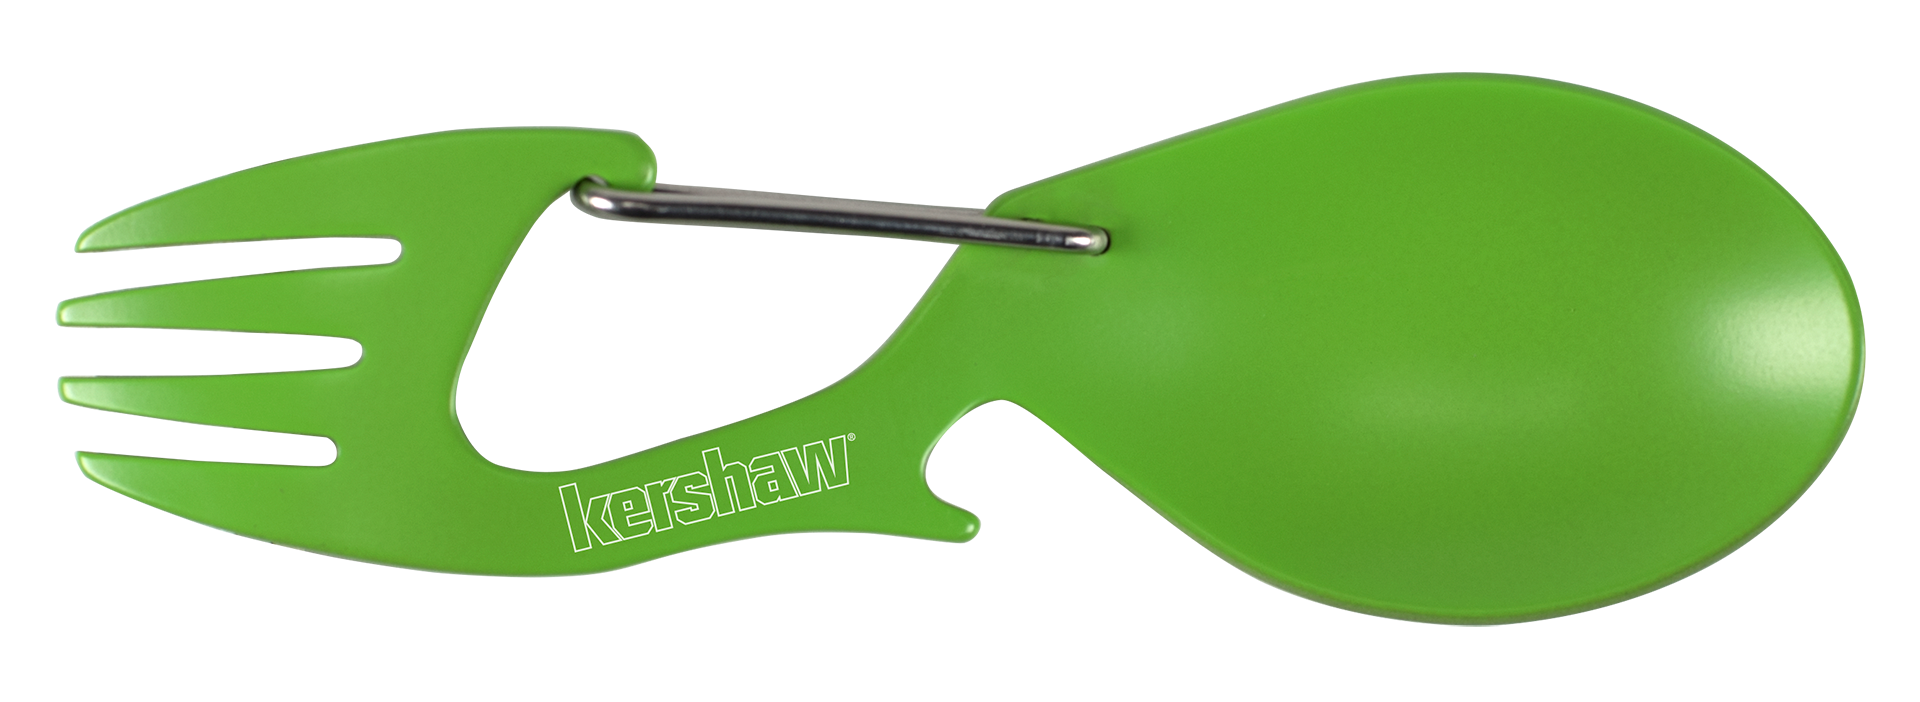 Kershaw Ration - Stainless Steel Spork Multi-Tool - Green - 1140GRN